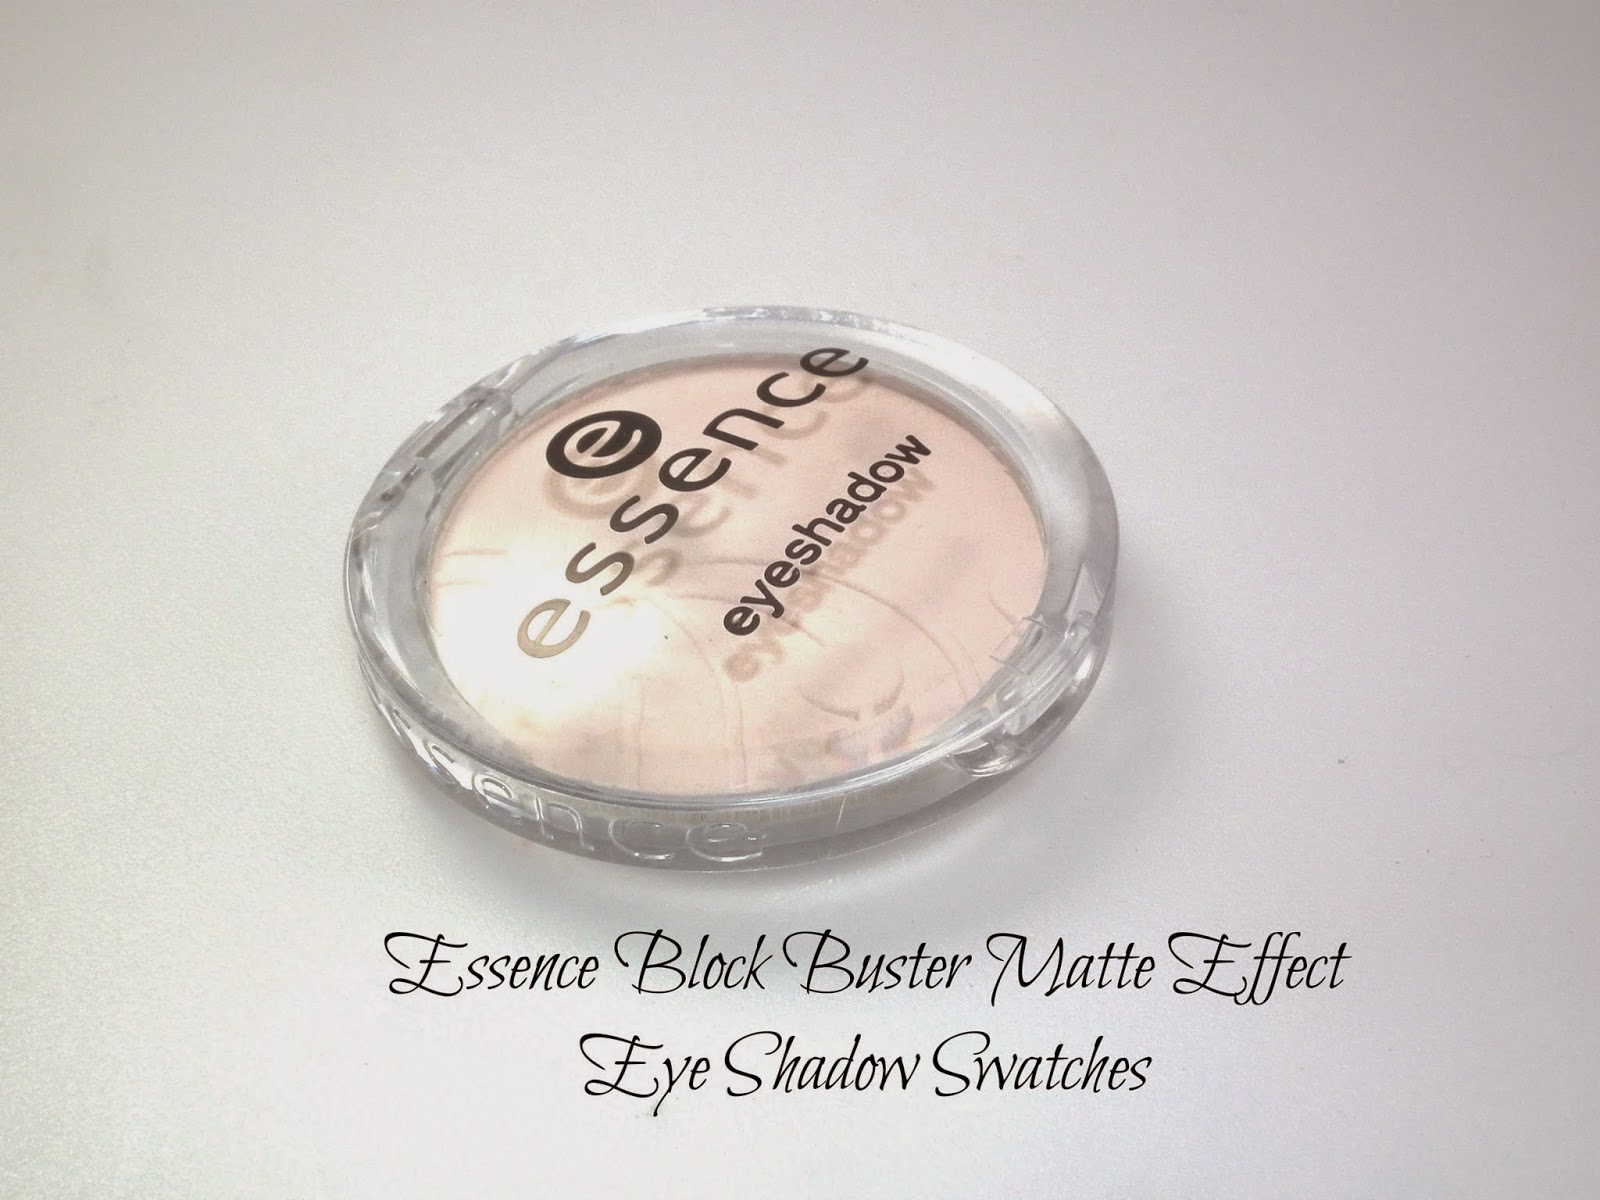 Essence Block Buster Matte Effect Eye Shadow Swatches